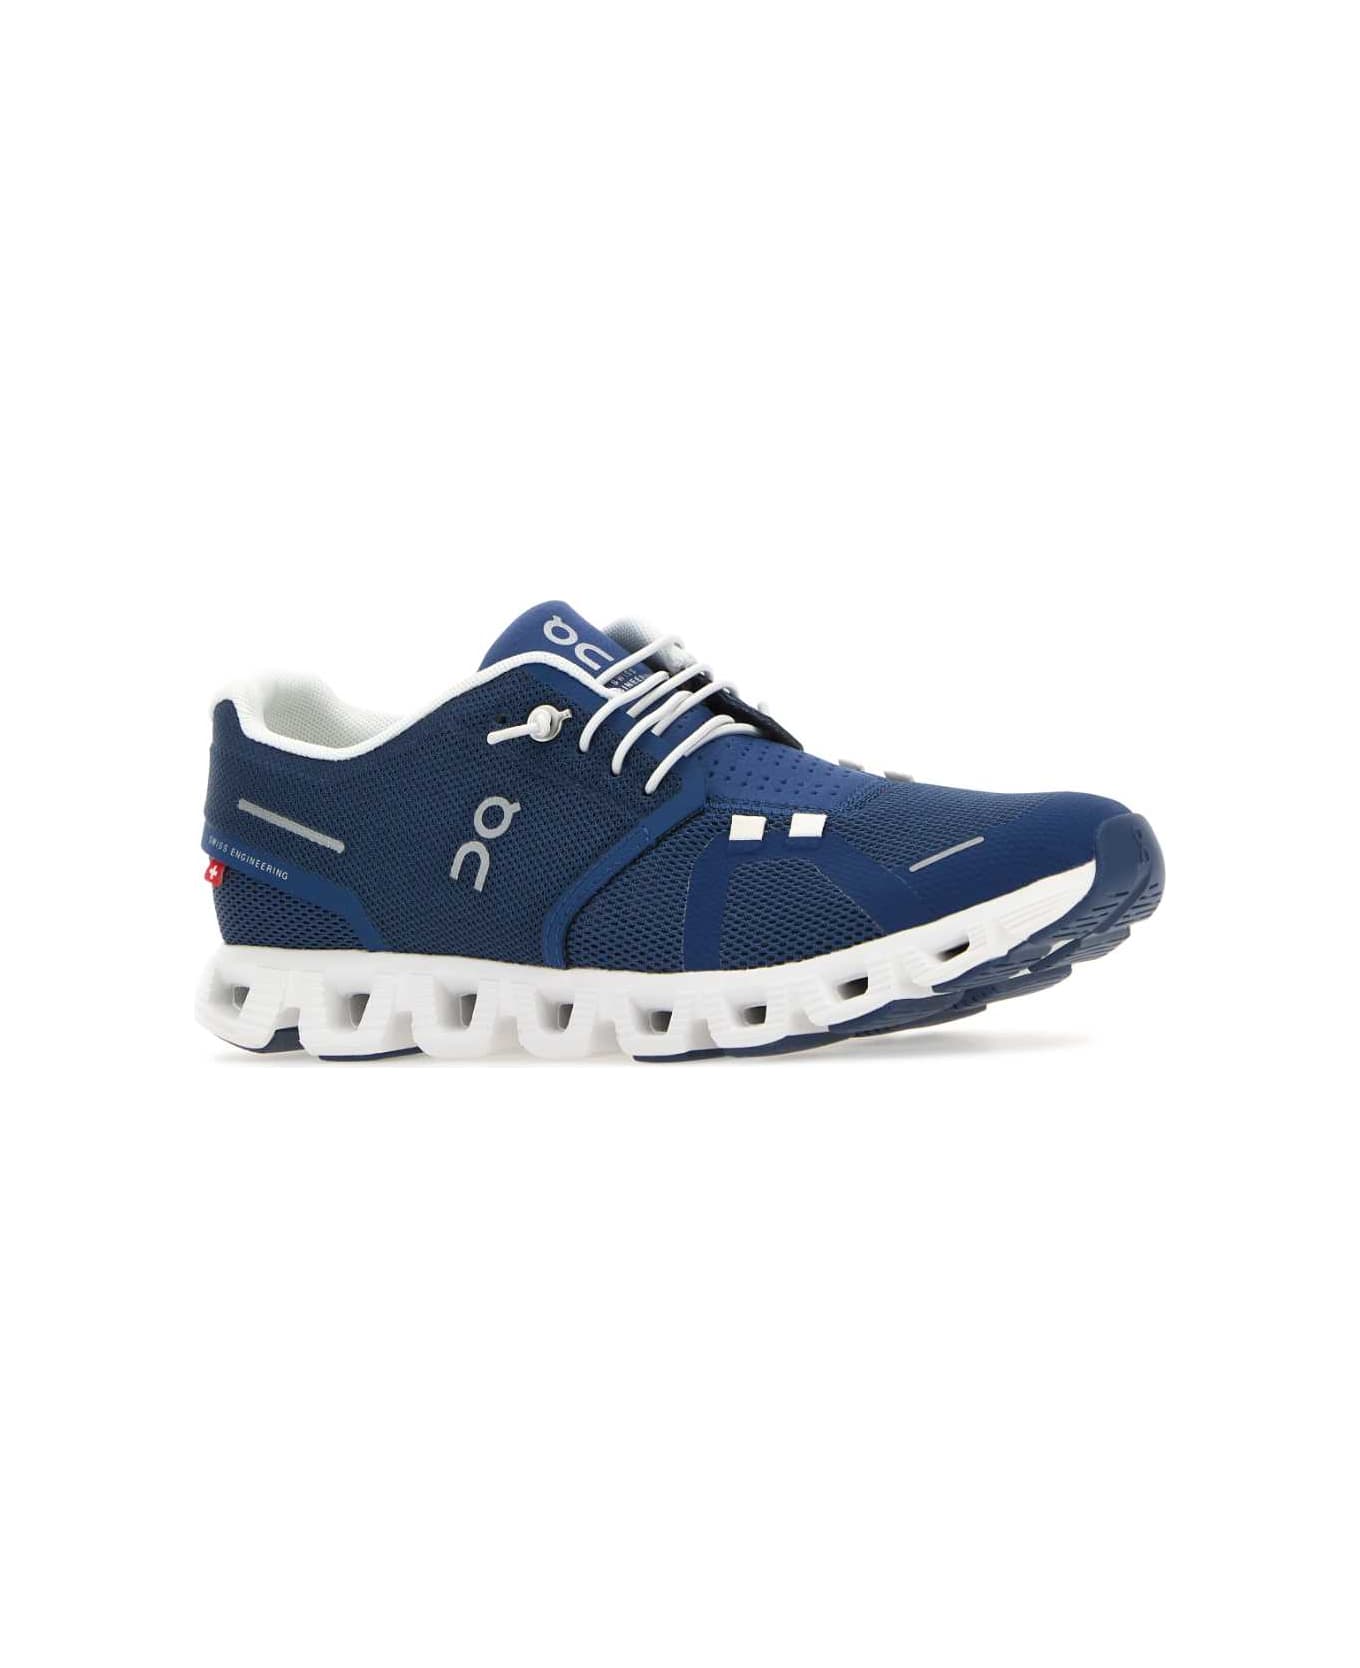 ON Blue Fabric Cloud 5 Sneakers - DENIMWHITE